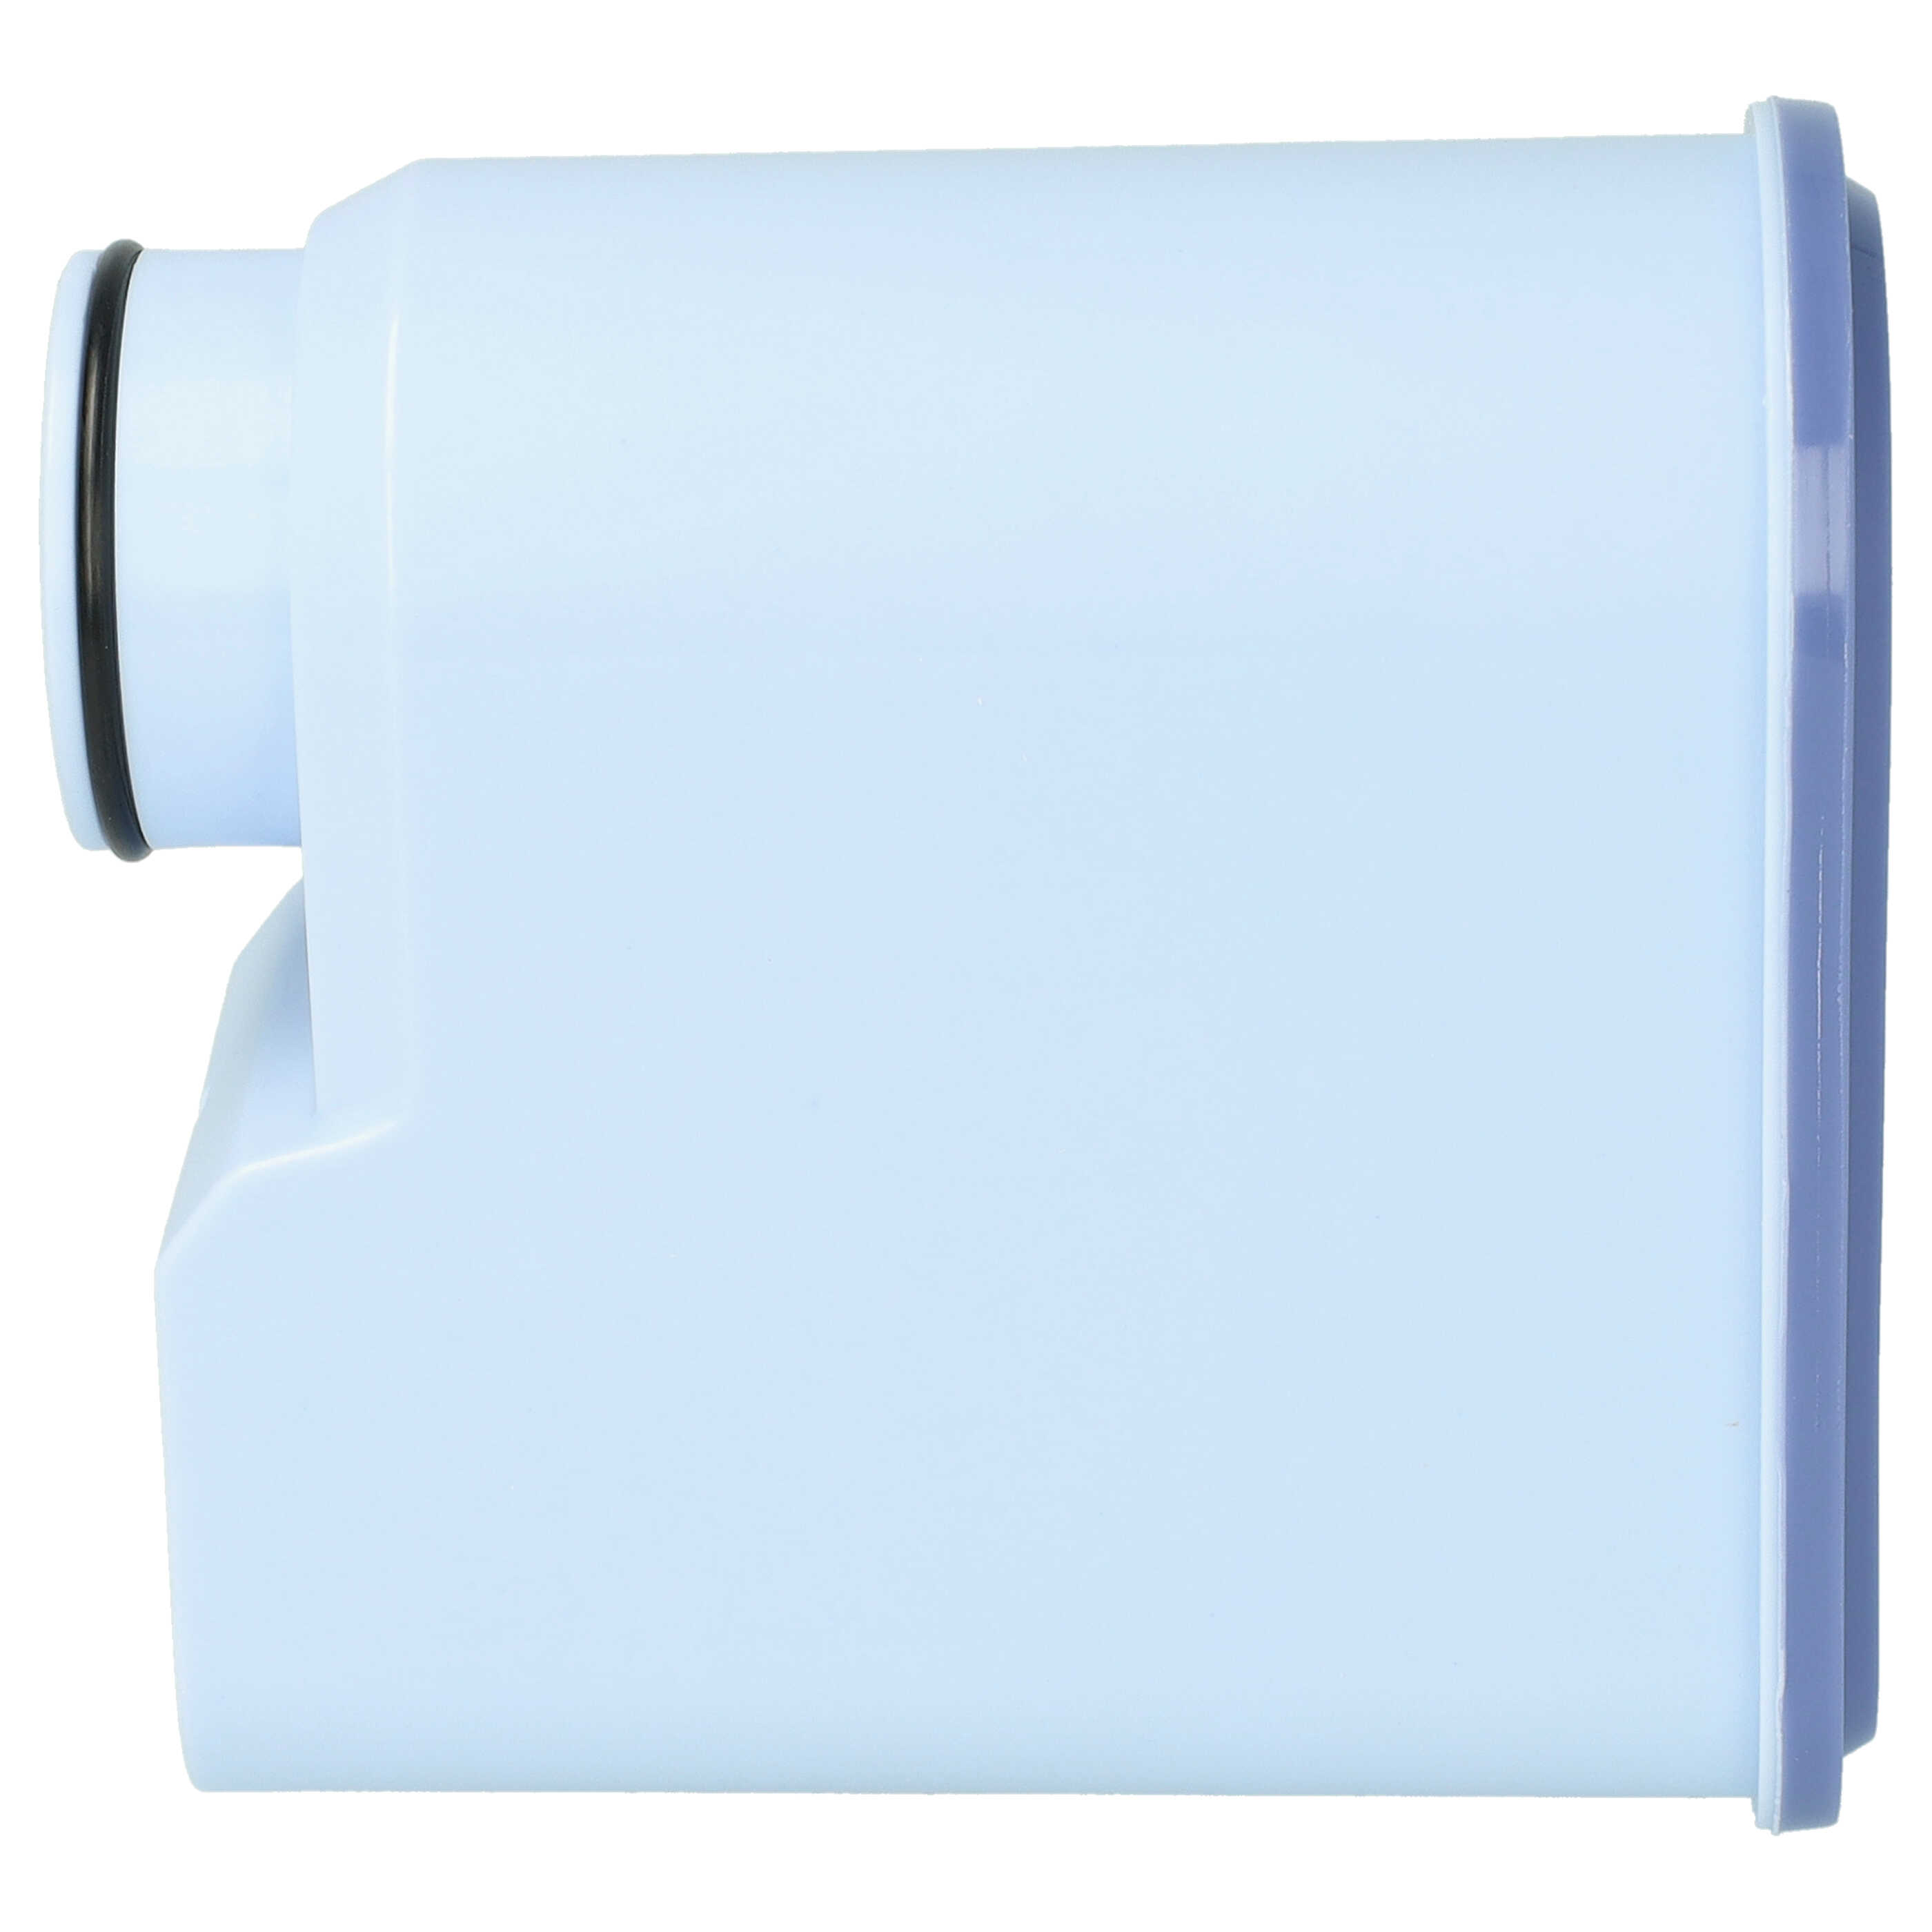 Filtr wody do ekspresu Philips zamiennik Philips AquaClean CA6903/10, CA6903/00, CA6903/22 - jasnoniebieski